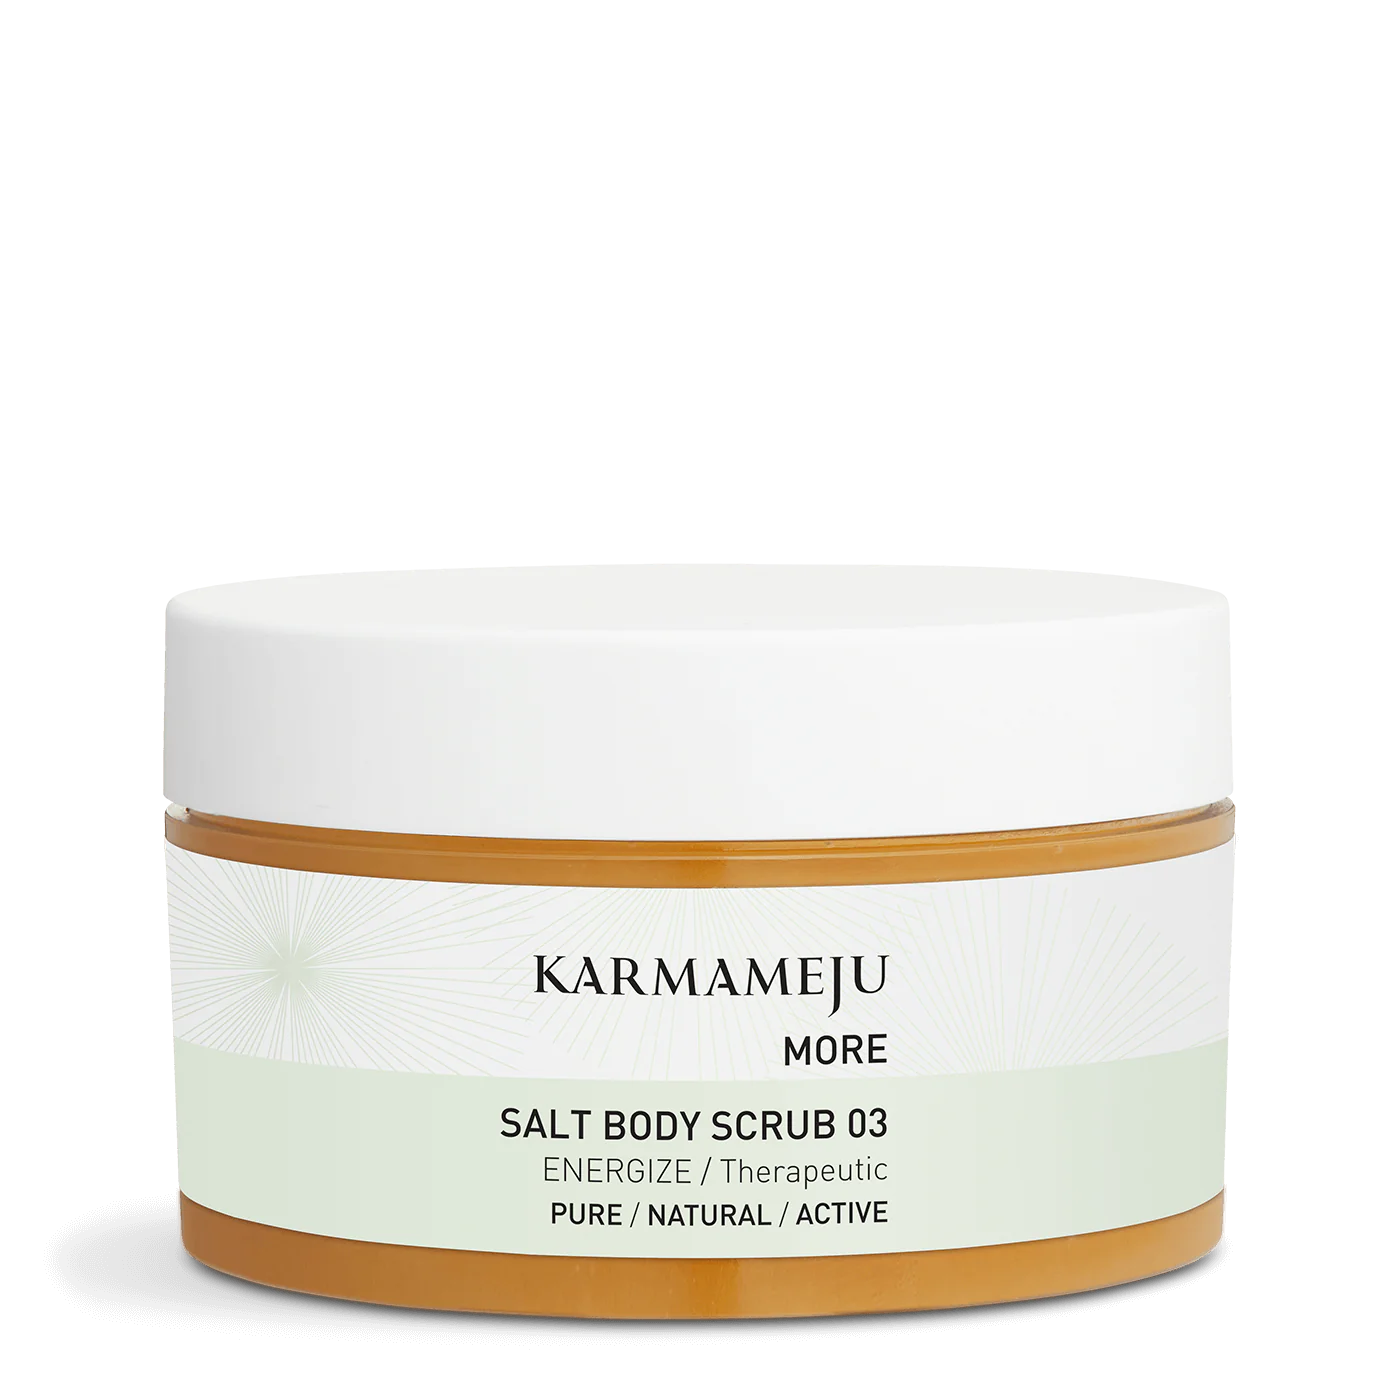 Karmameju Natural Salt Body Scrub, More